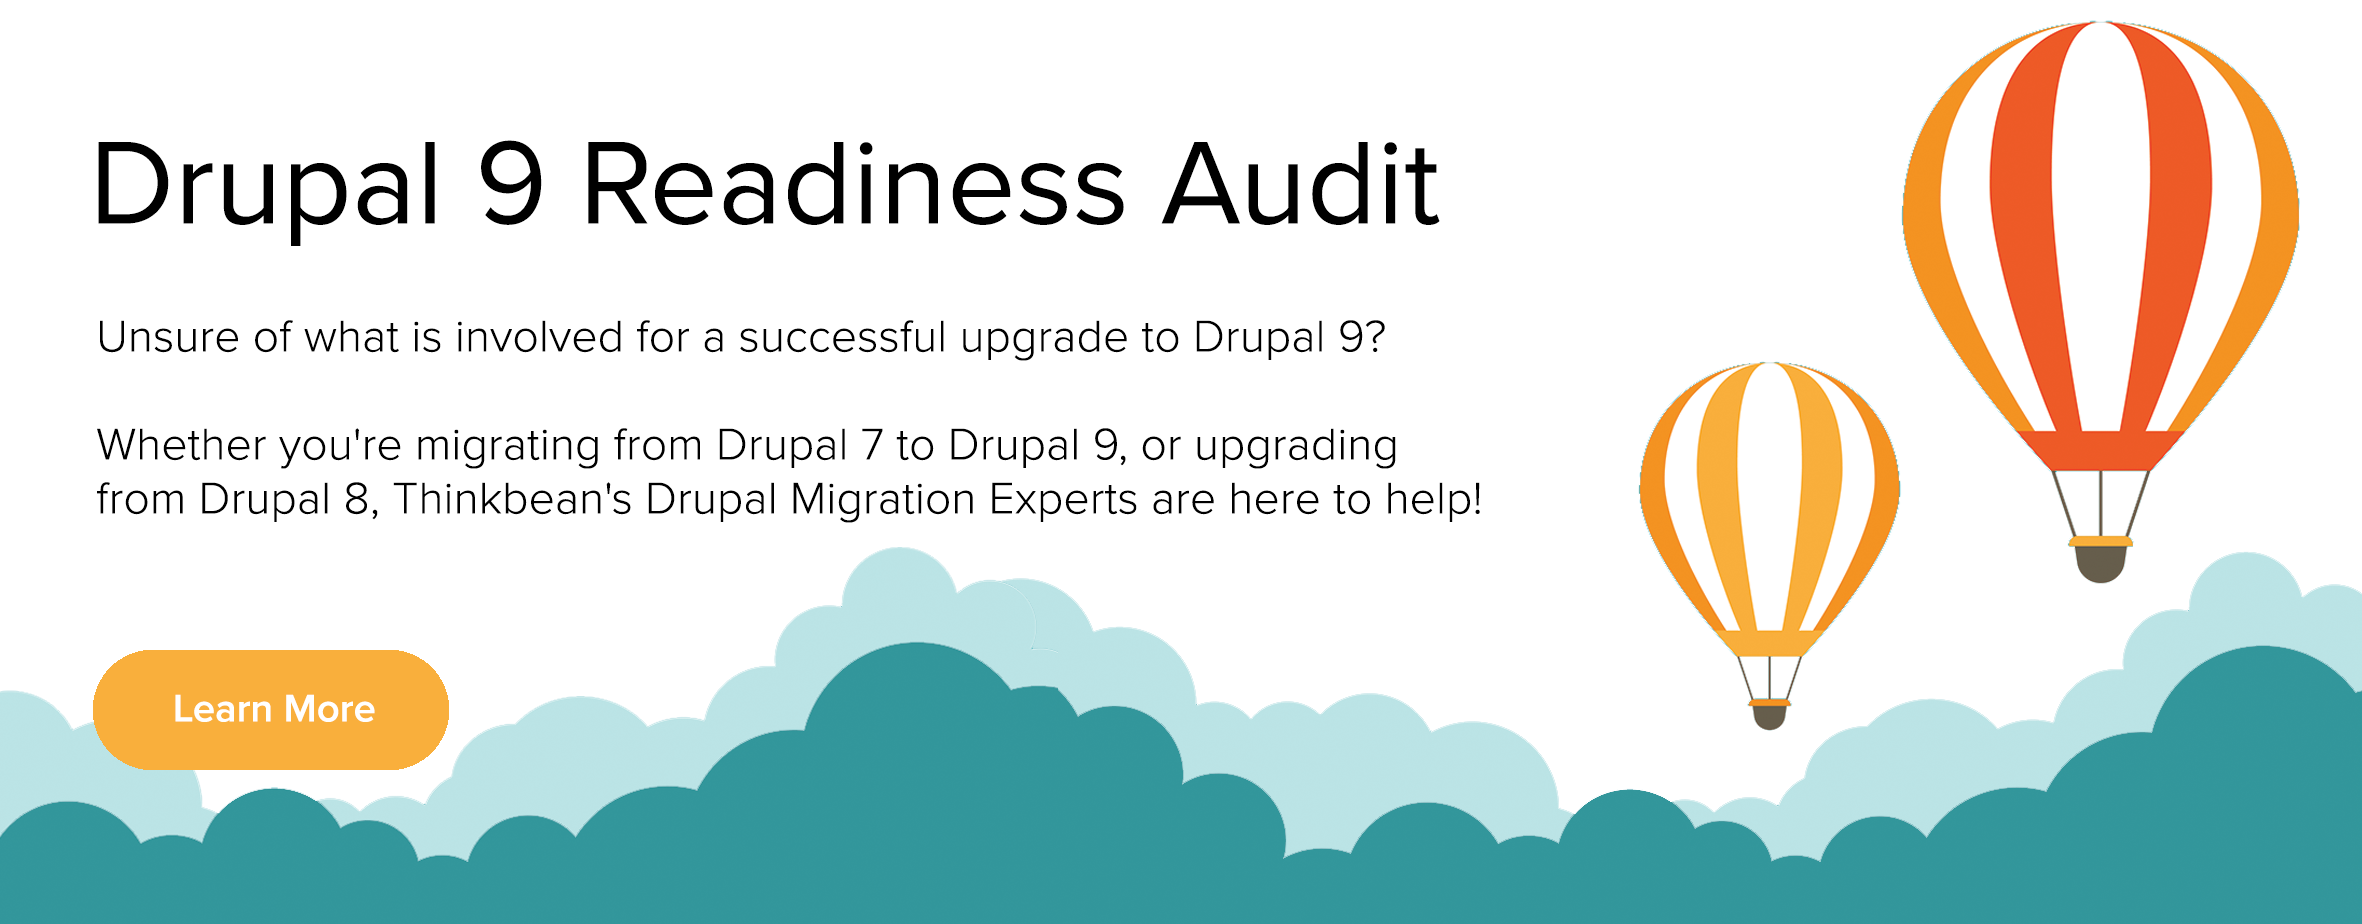 Drupal 9 Readiness Audit | Thinkbean